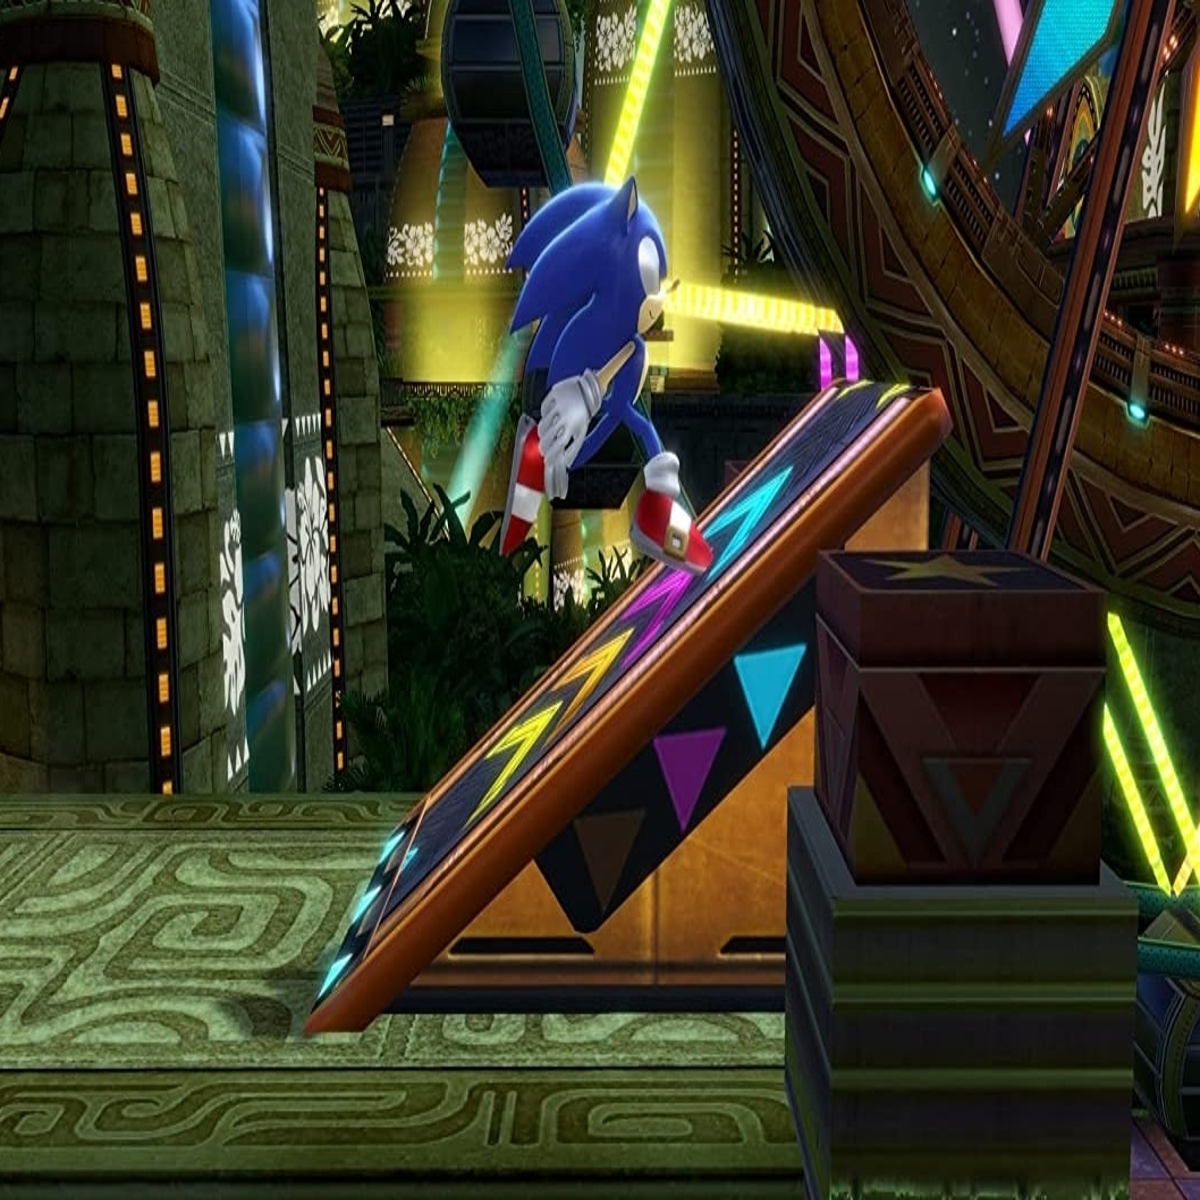 Sonic Colors Original - Wii Europeu